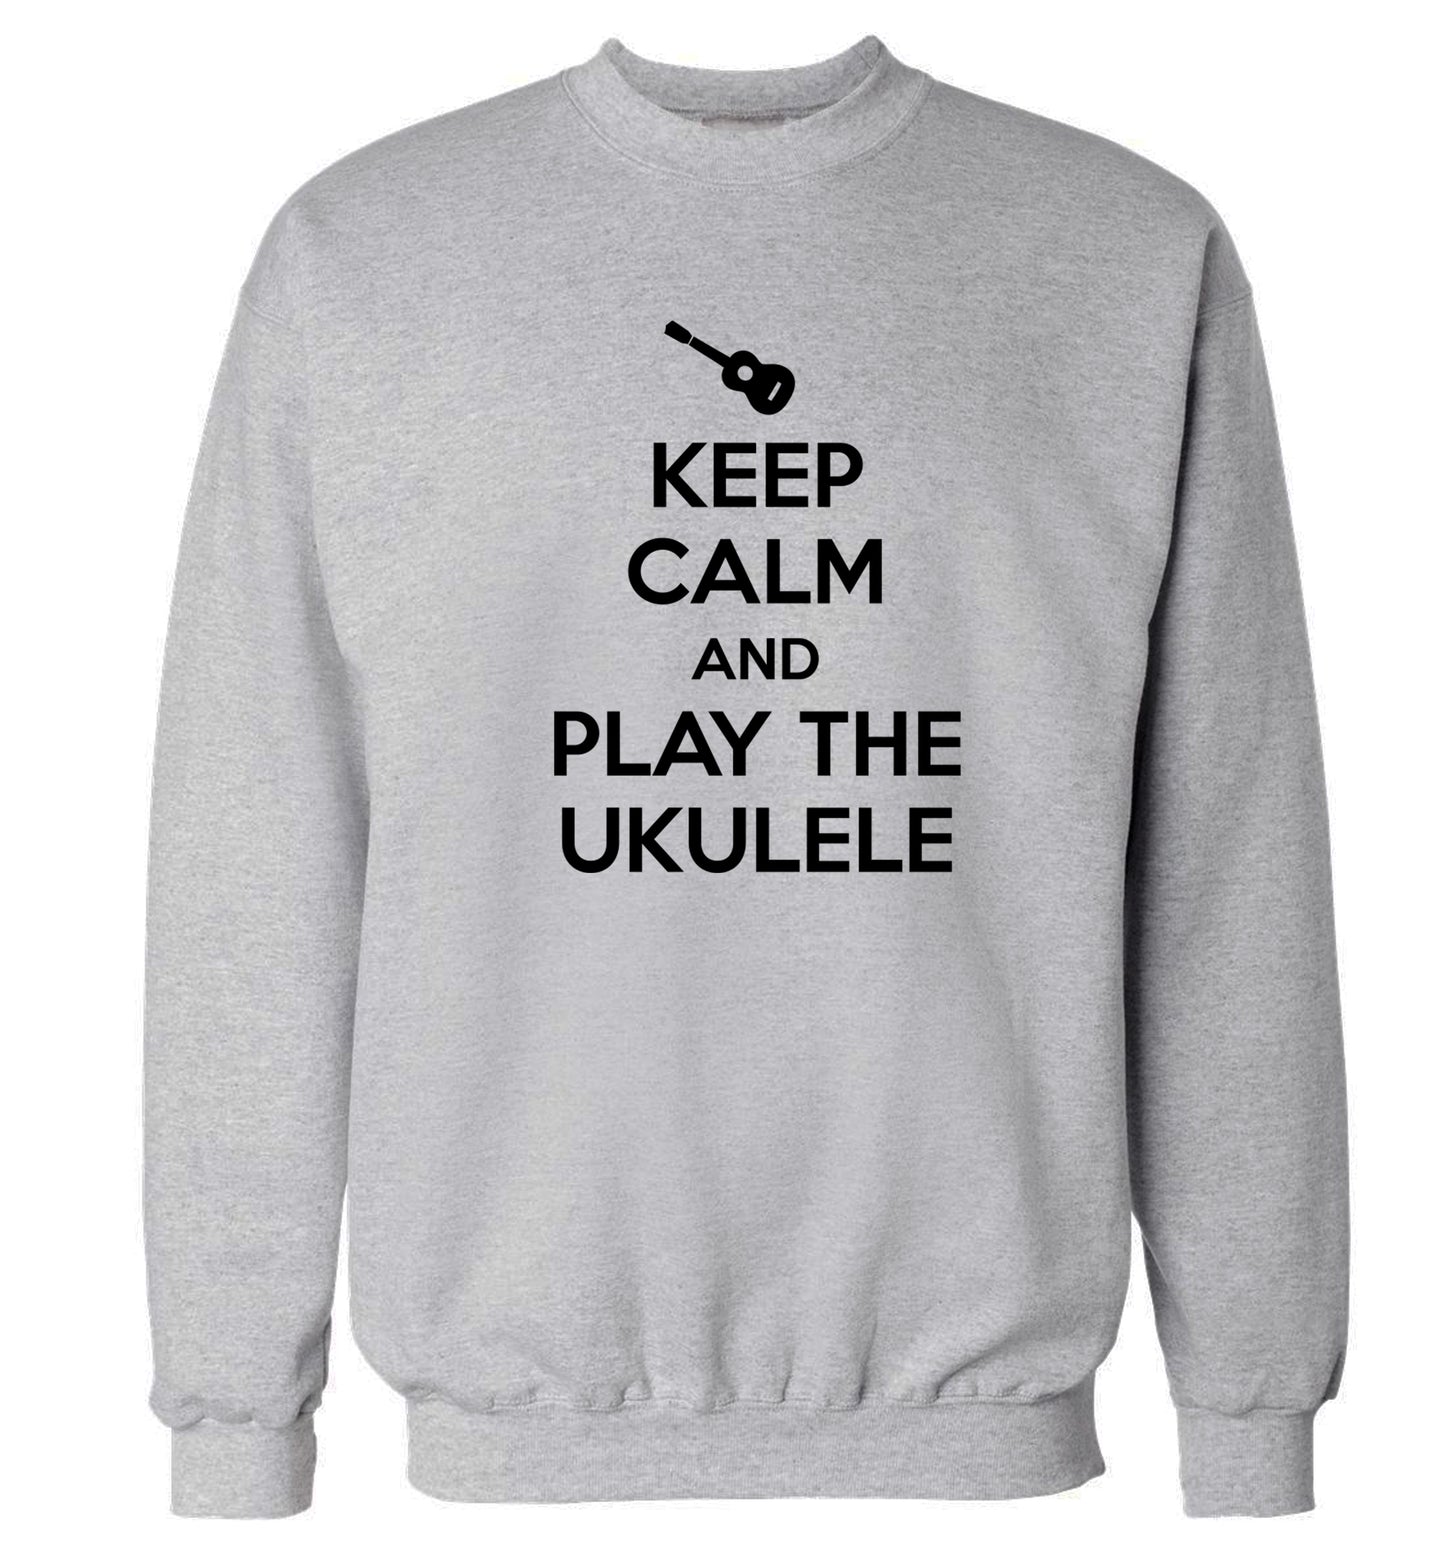 Keep calm and play the ukulele Adult's unisex grey Sweater 2XL